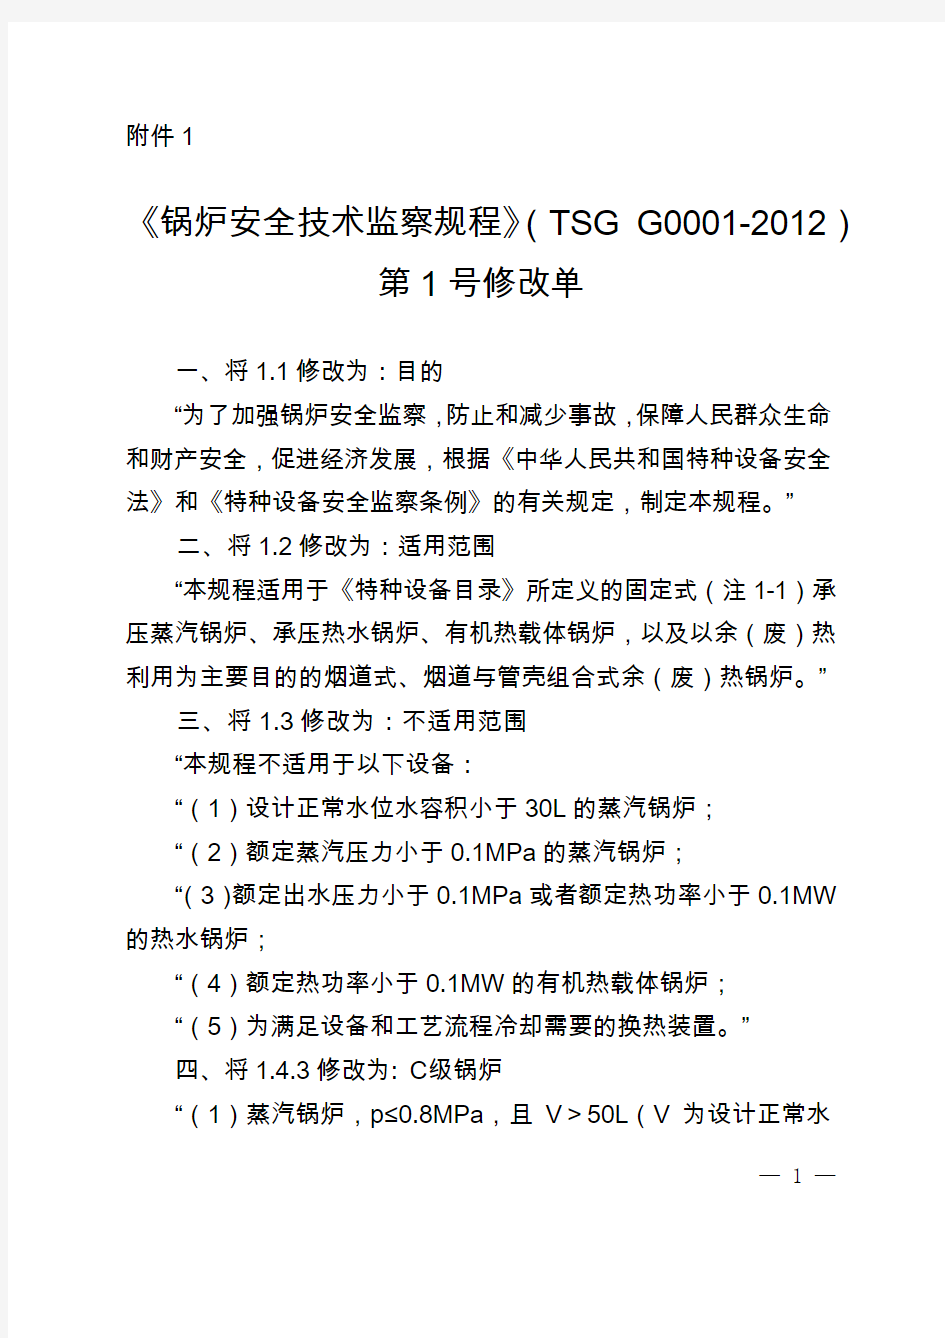 TSGG0001-2012／XG1-2017锅炉安全技术监察规程-2017.06.01